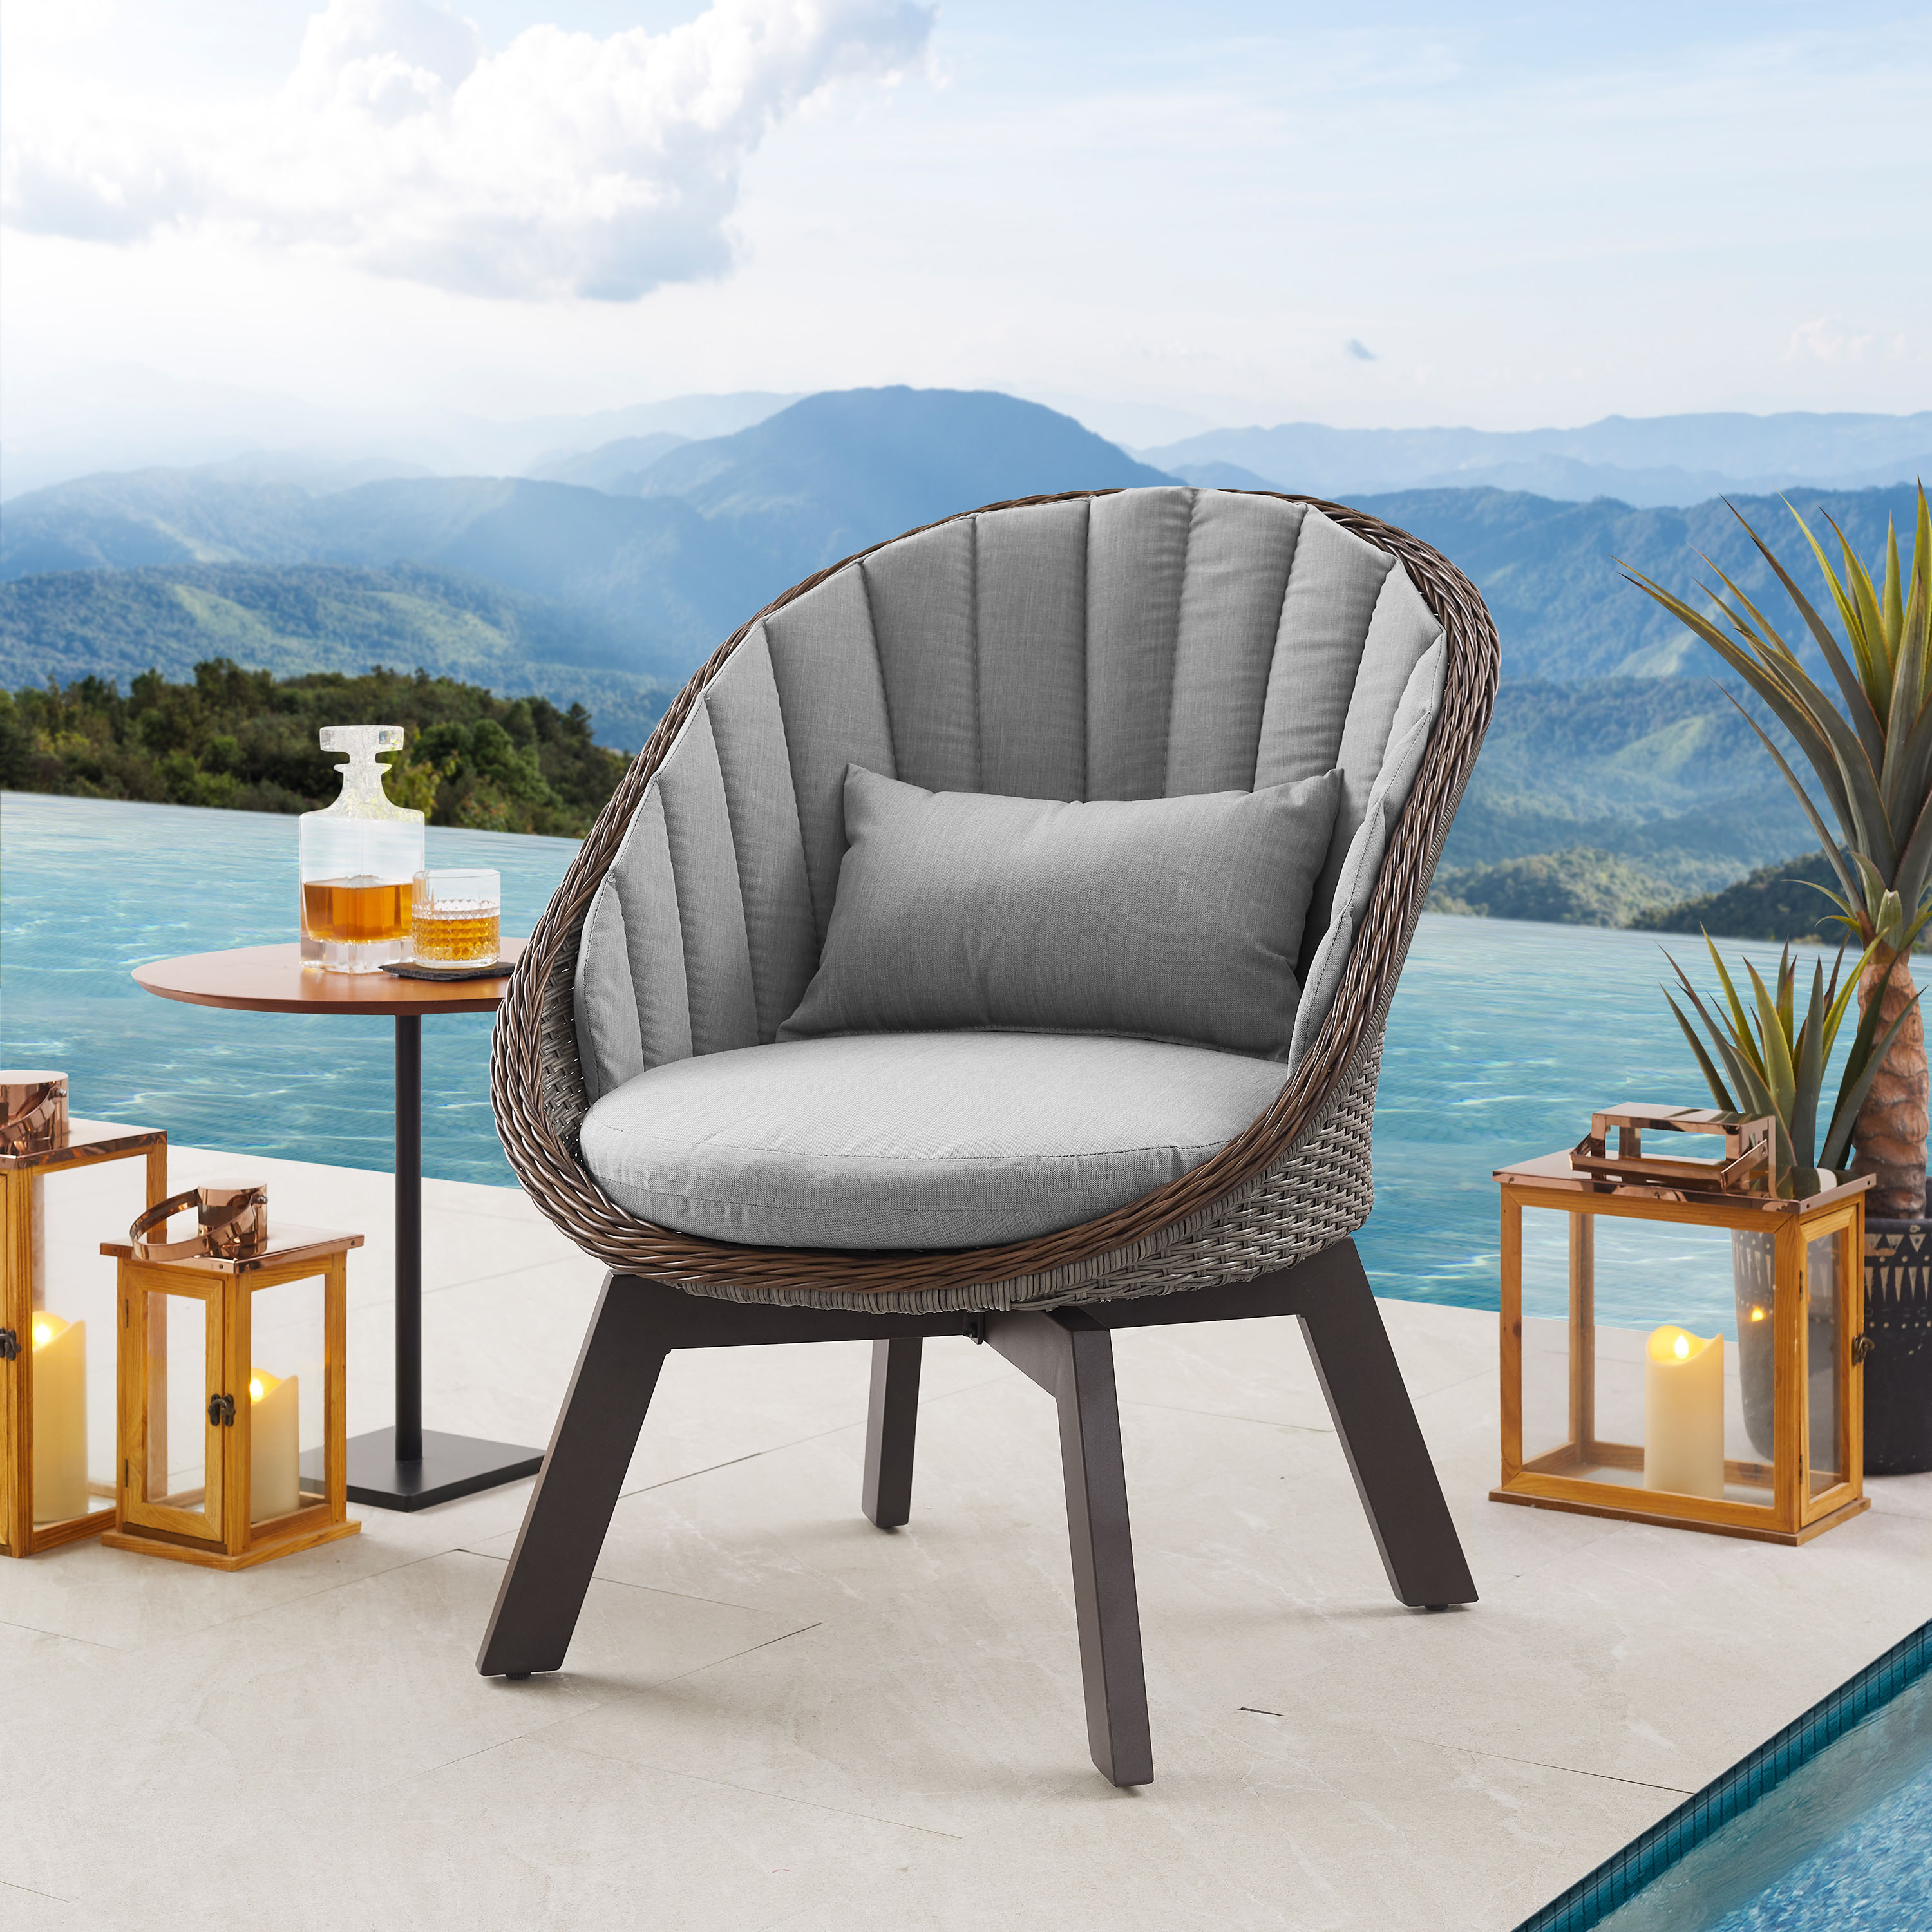 Art Leon 3 Piece Patio Chair Set Garden Outdoor Swivel Lounge Chair Gray - image 5 of 7